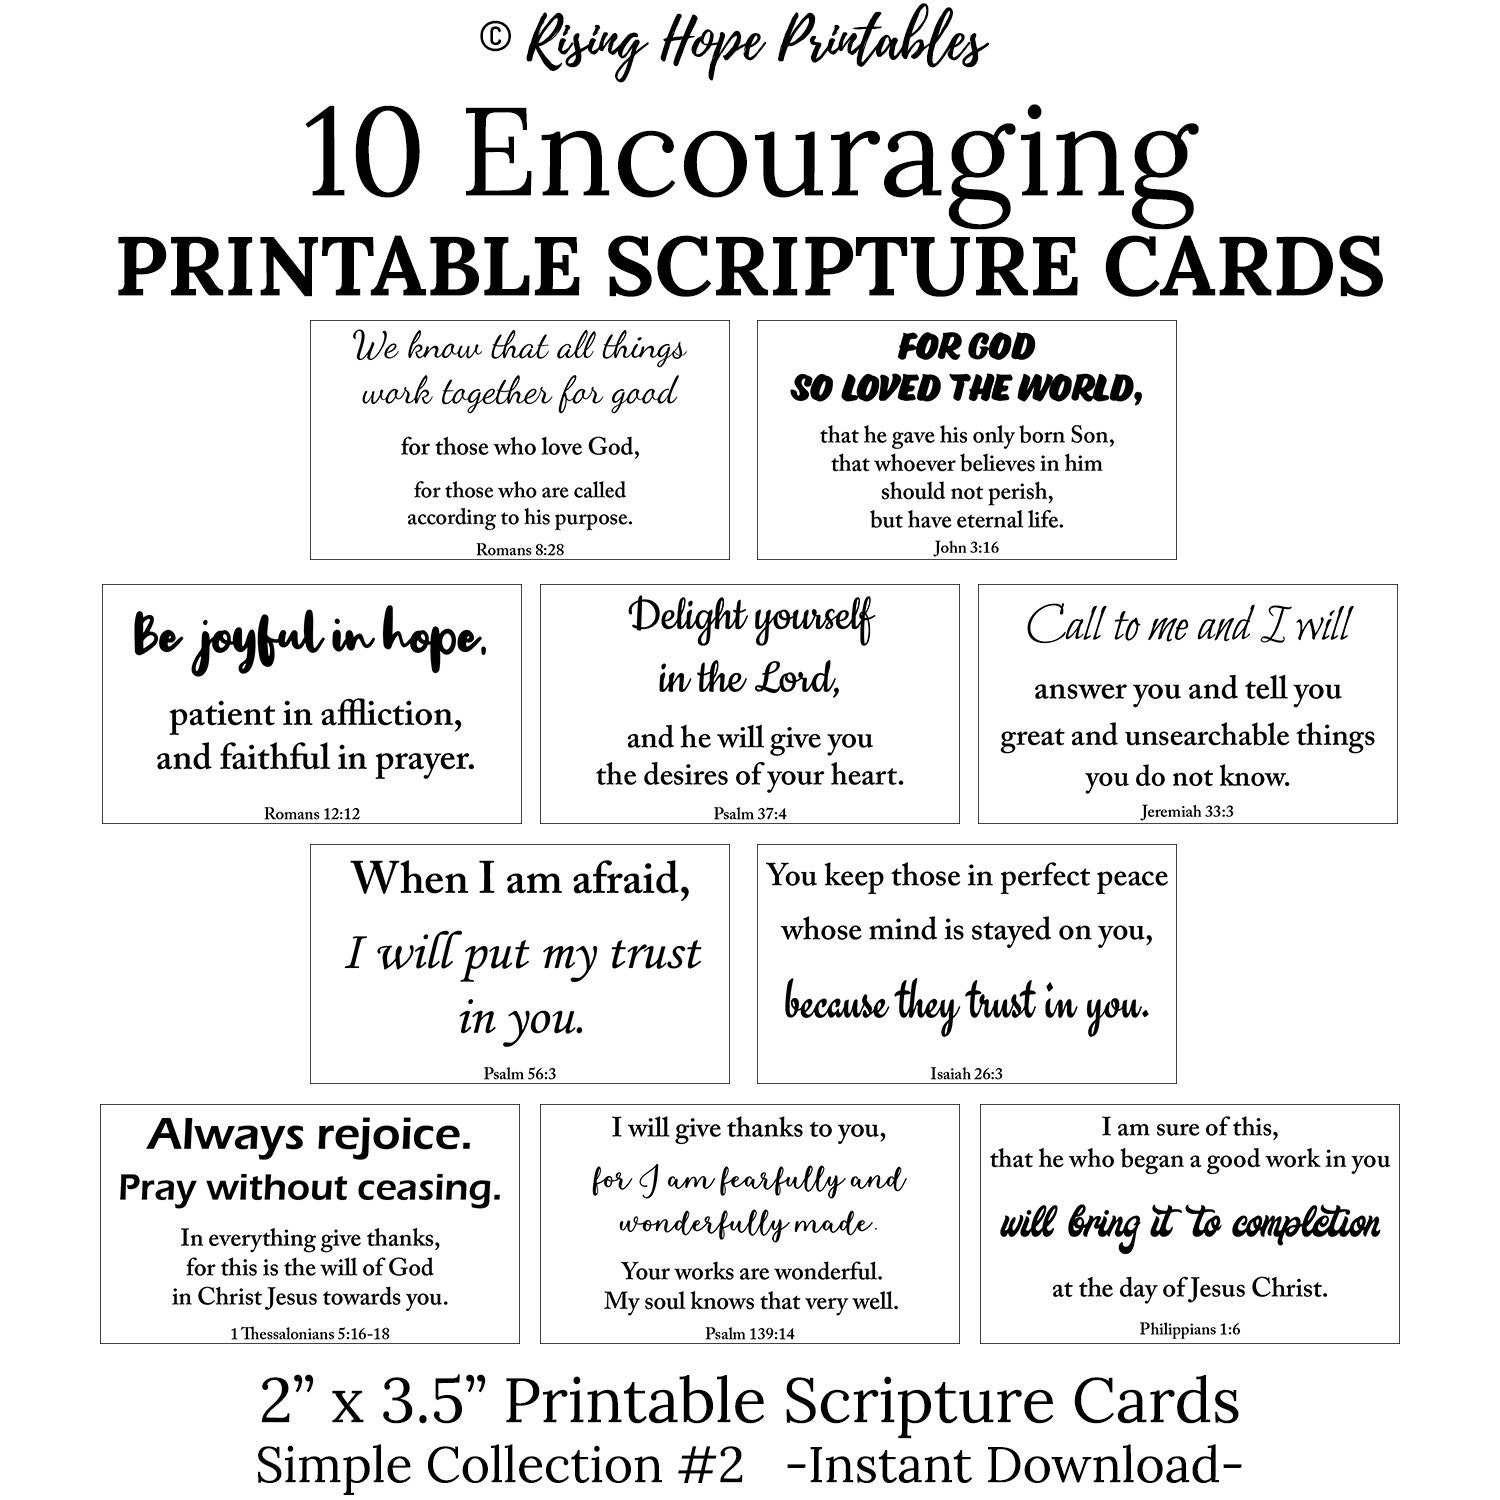 Mini Scripture Card Value Pack: 5 Sets of 10 Inspirational Cards, Comm –  Truepost Inc.